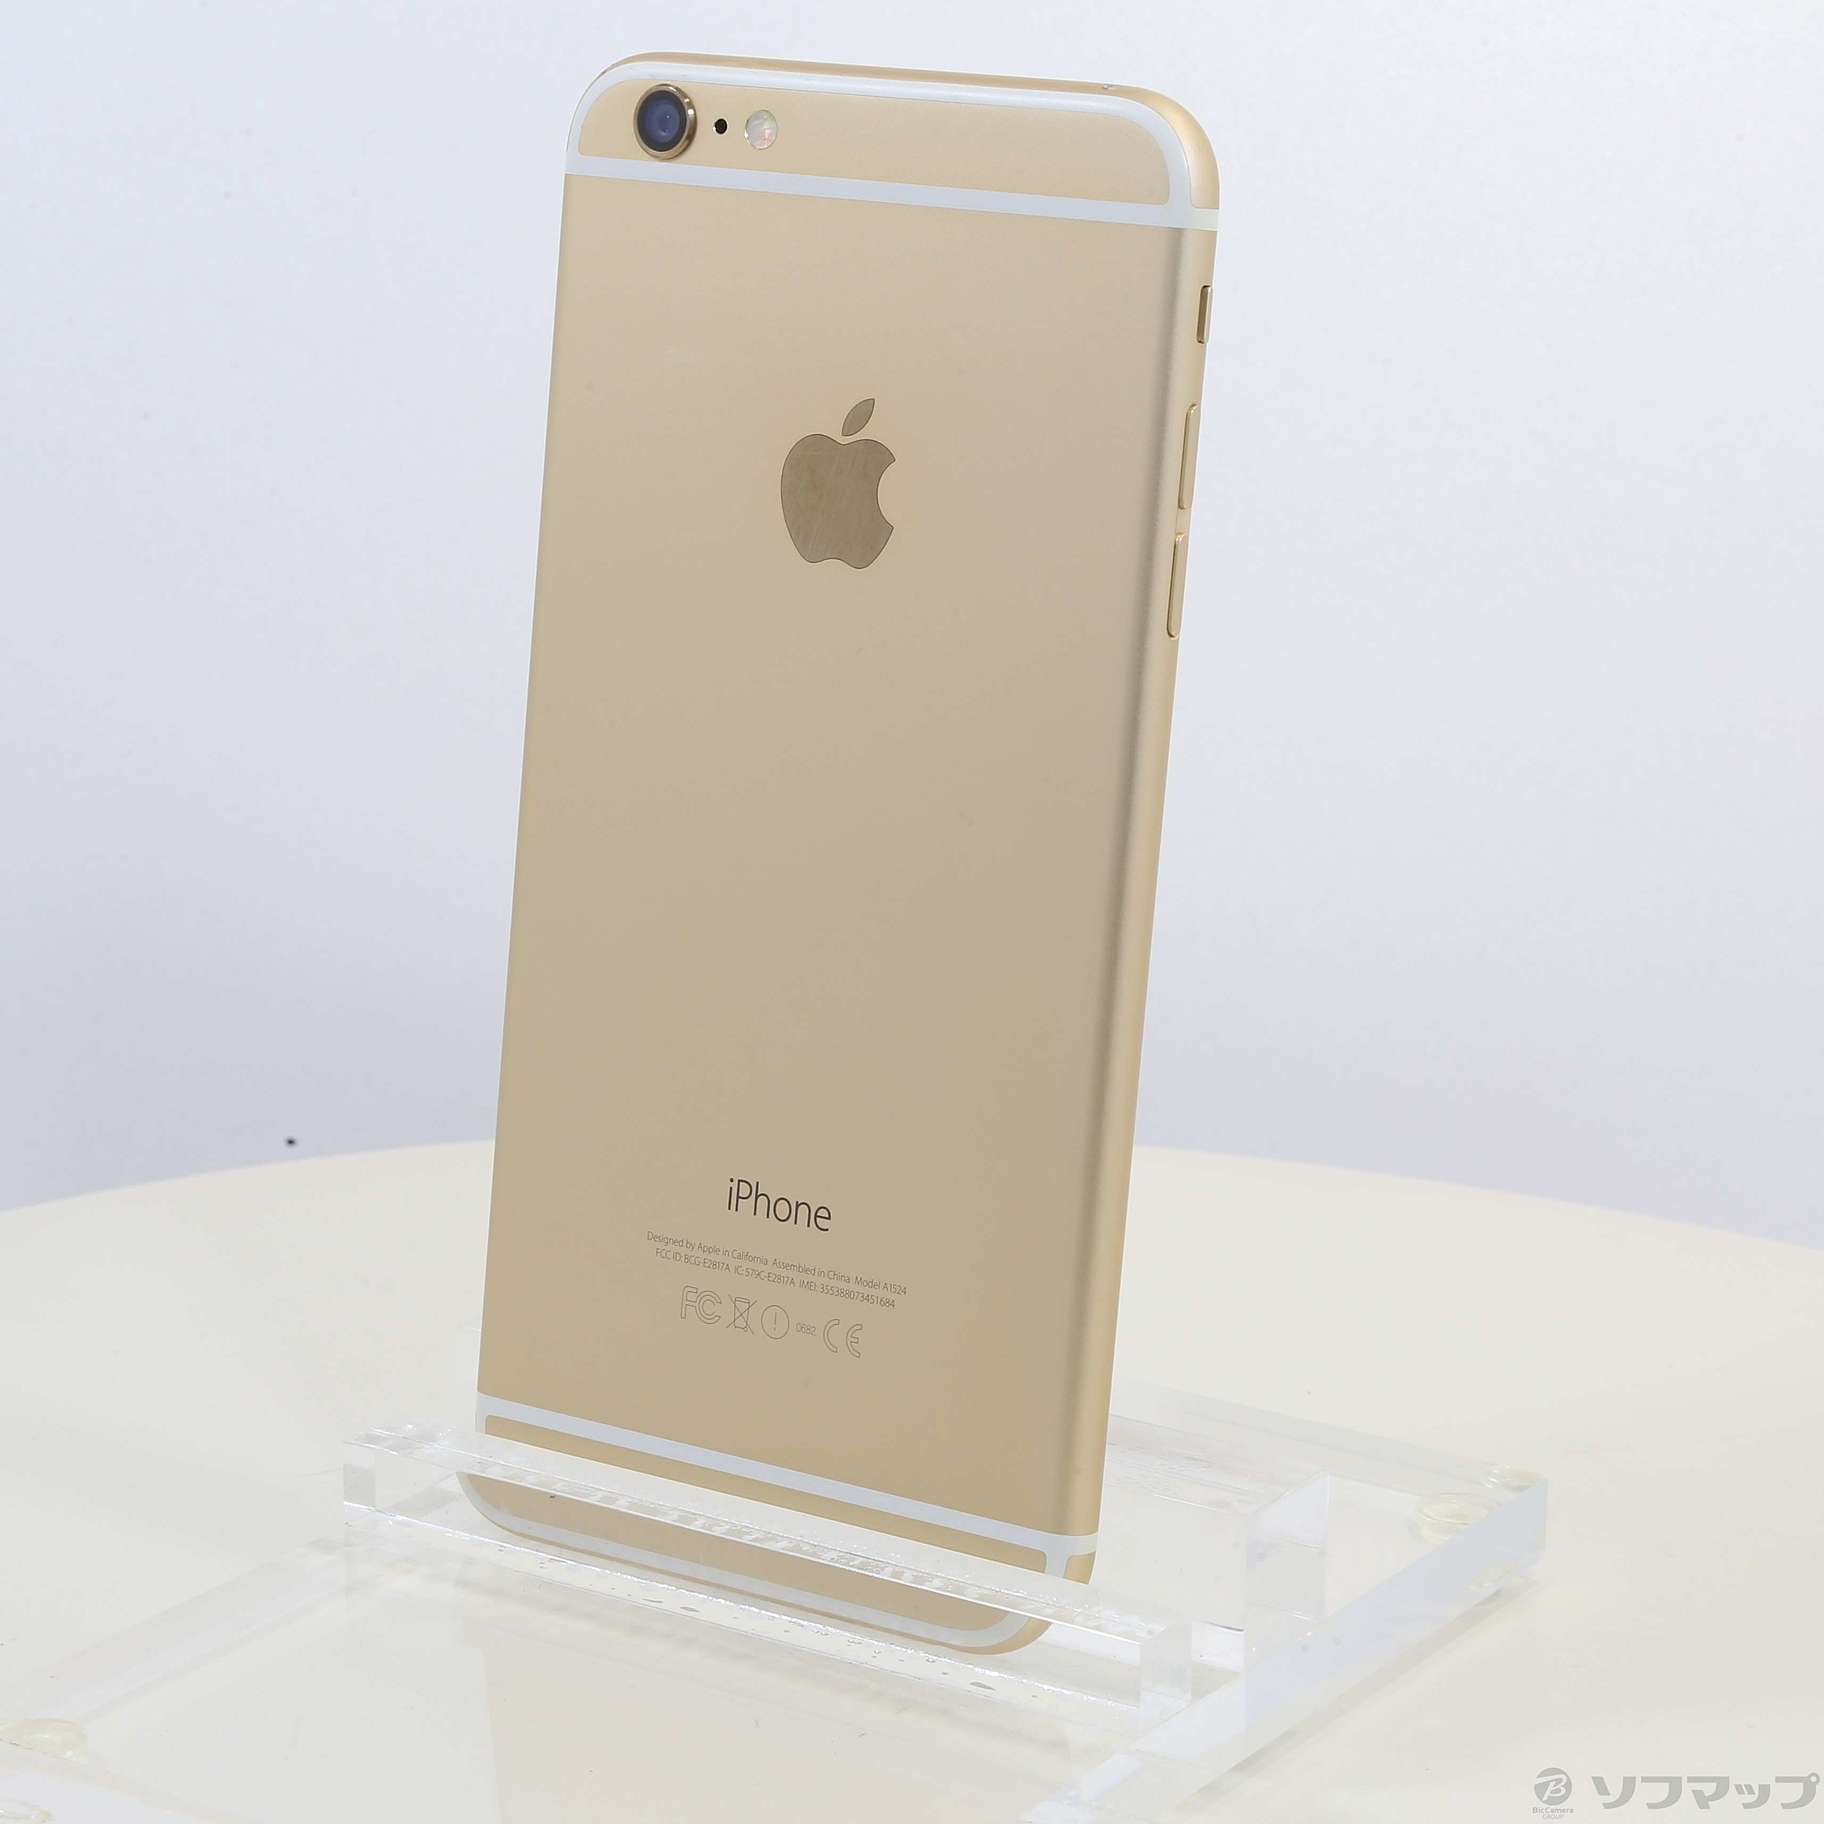 iPhone 6 Gold 16 GB Softbank - スマートフォン本体